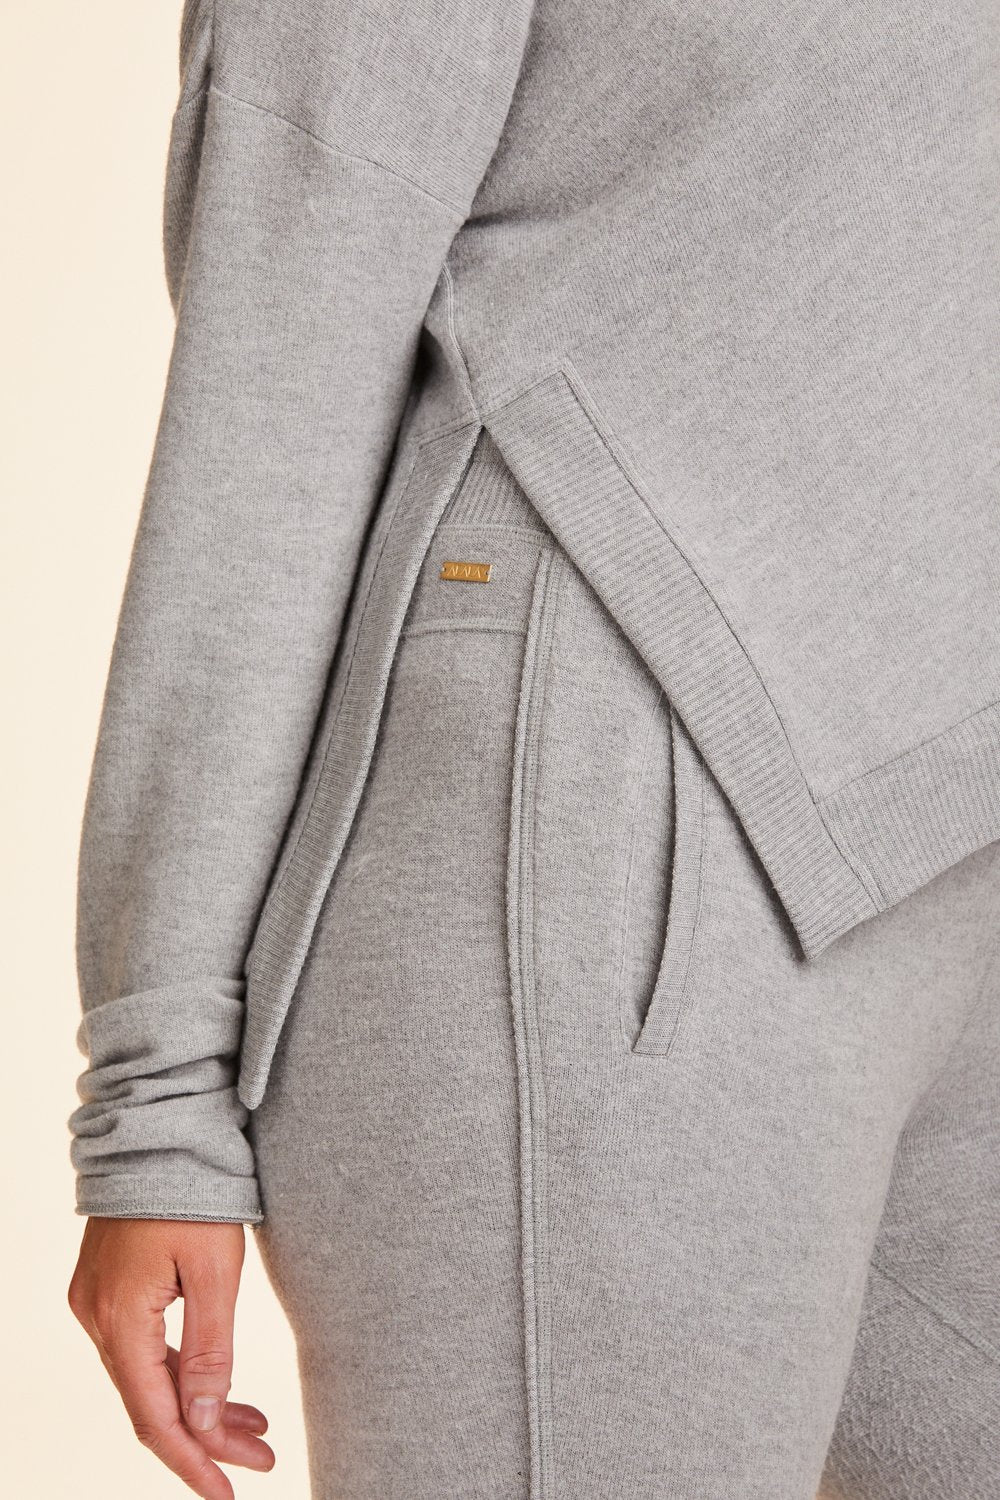 Close-up view of Alala Women's Luxury Athleisure super-soft grey sweatshirt